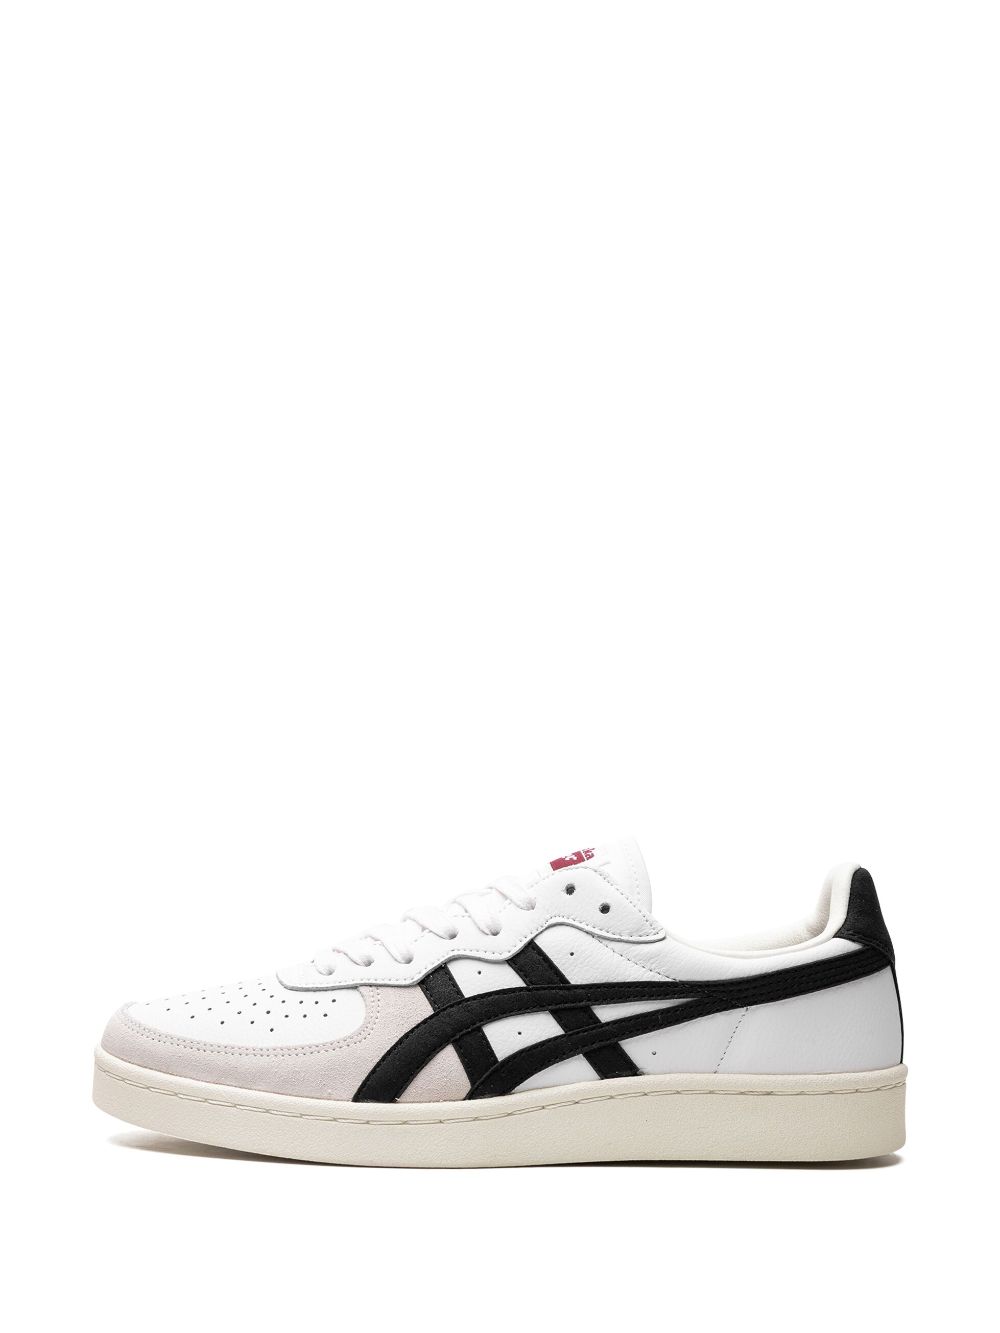 Shop Onitsuka Tiger Gsm "white/grey/black" Sneakers